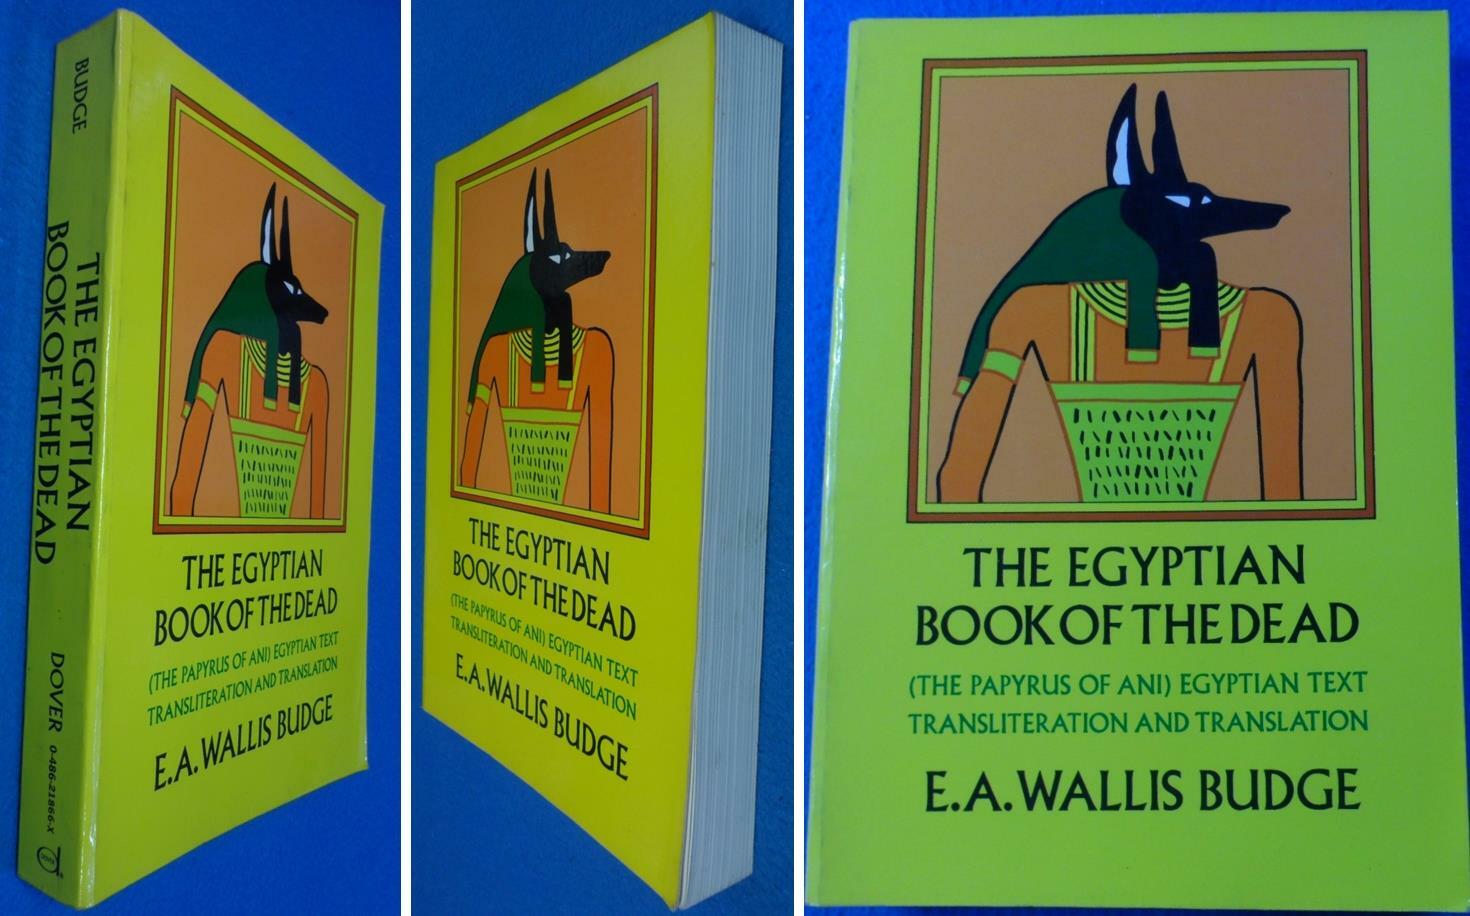 [중고] (死者의 書) The Egyptian Book of the Dead  / ISBN : 048621866X  - Softcover   ☞ 상현서림 ☜ /사진의 제품  /